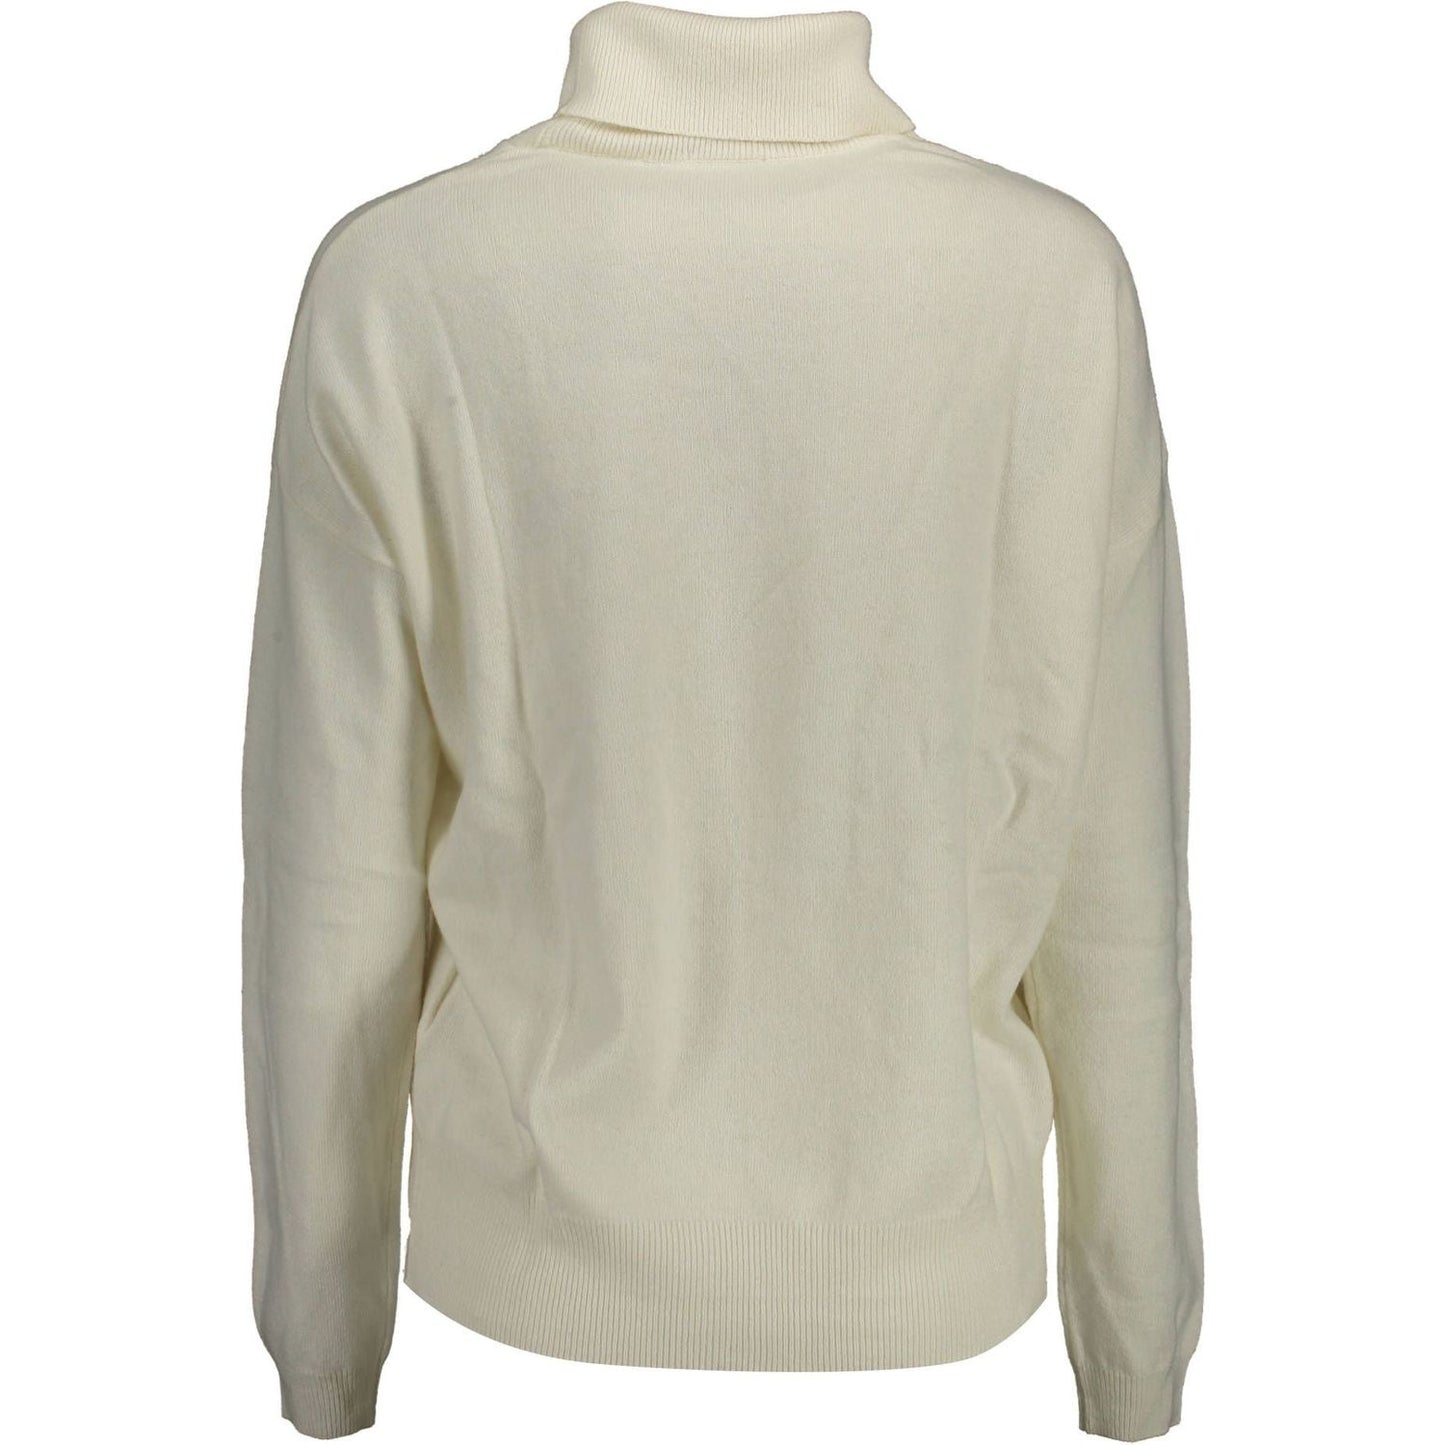 U.S. POLO ASSN.Elegant Turtleneck Sweater With Embroidered LogoMcRichard Designer Brands£119.00